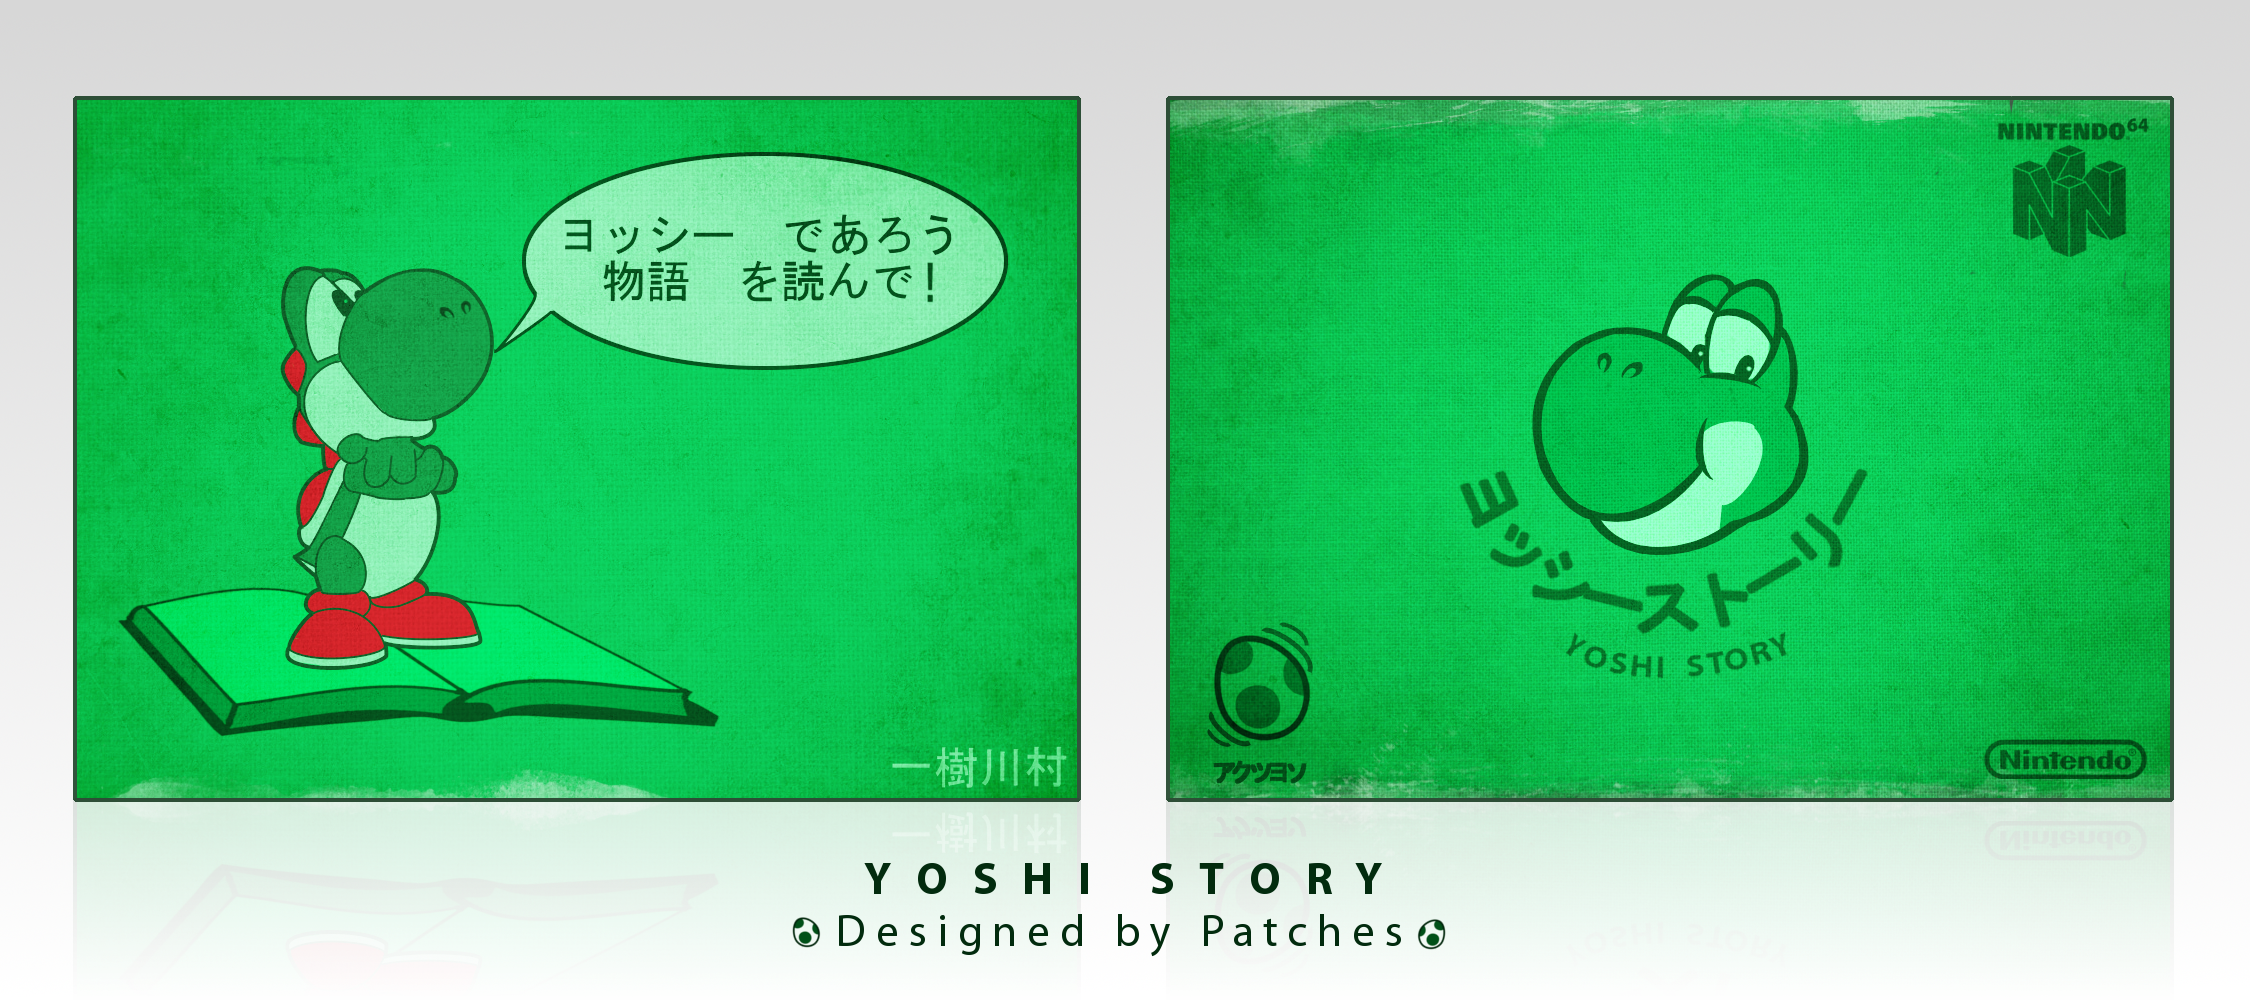 Yoshi's Story box cover